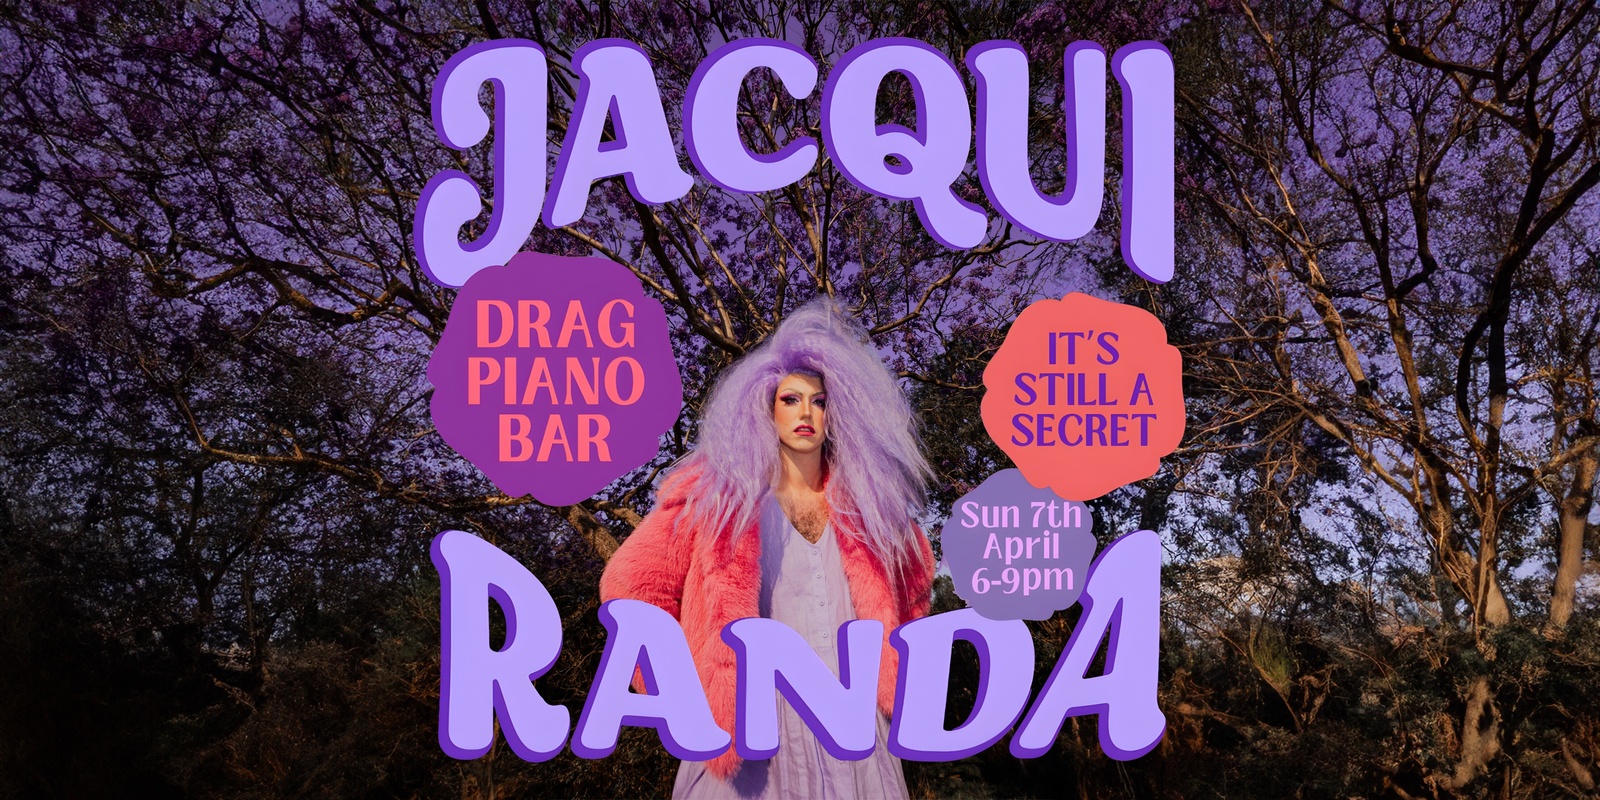 Banner image for Drag Piano Bar with Jacqui Randa